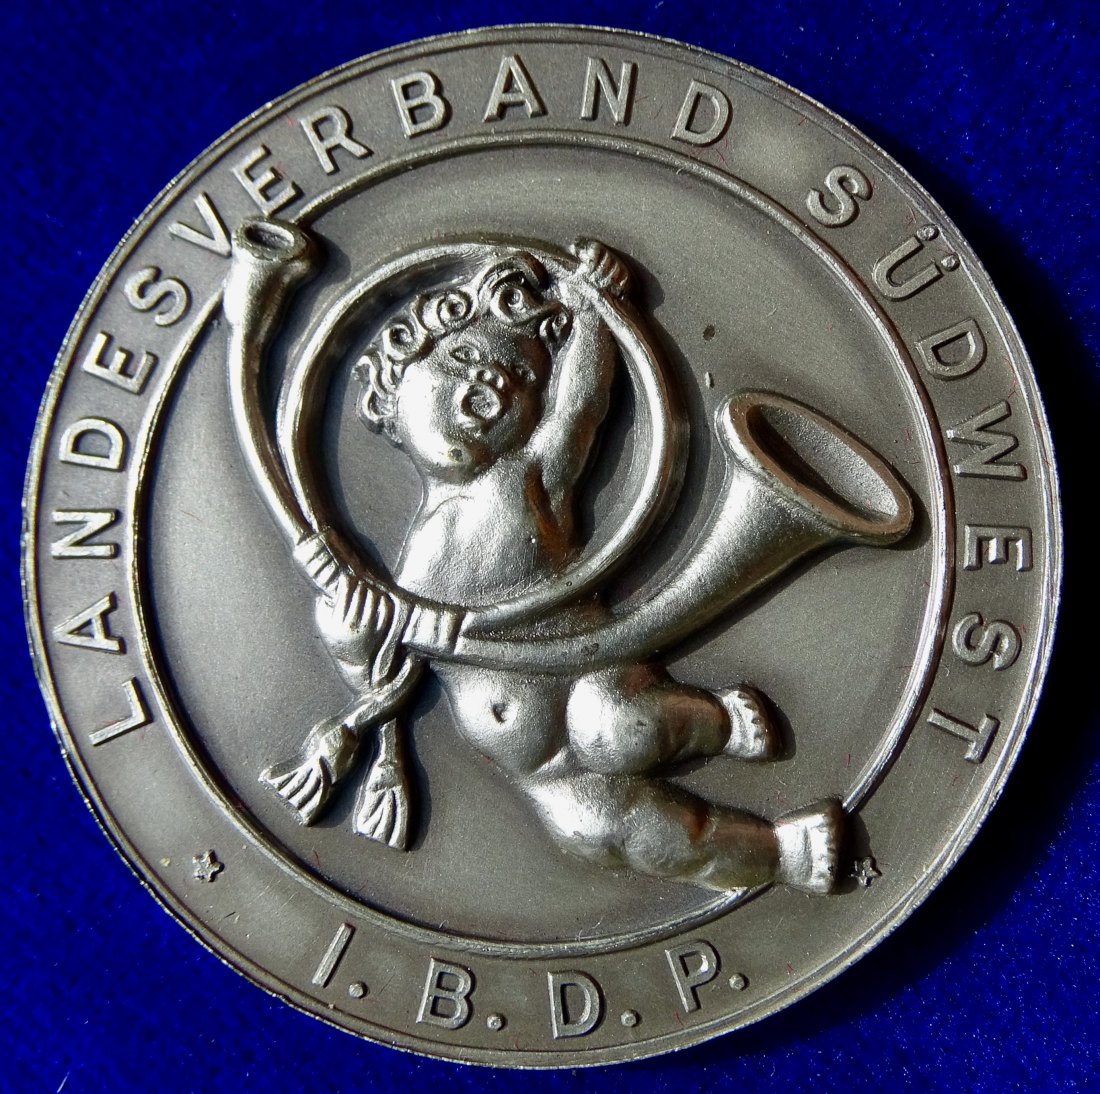  Landau i.d. Pfalz Silber-Medaille 1959 Philatelie für Oberbürgermeister Alois Kraemer   